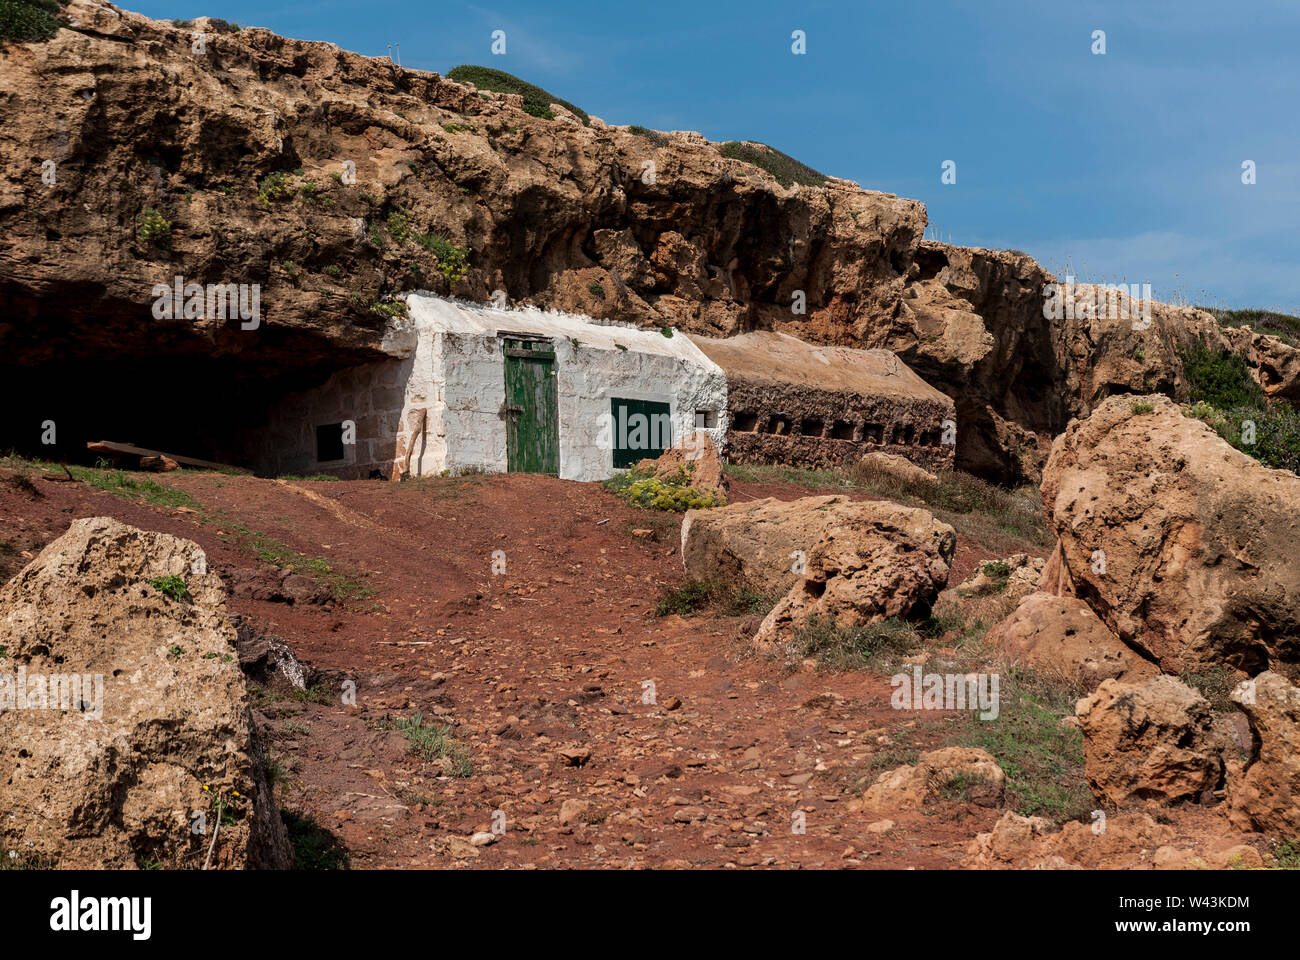 An old cabin on the Cami de Cavalls coastal walk in Minorca island. Stock Photo